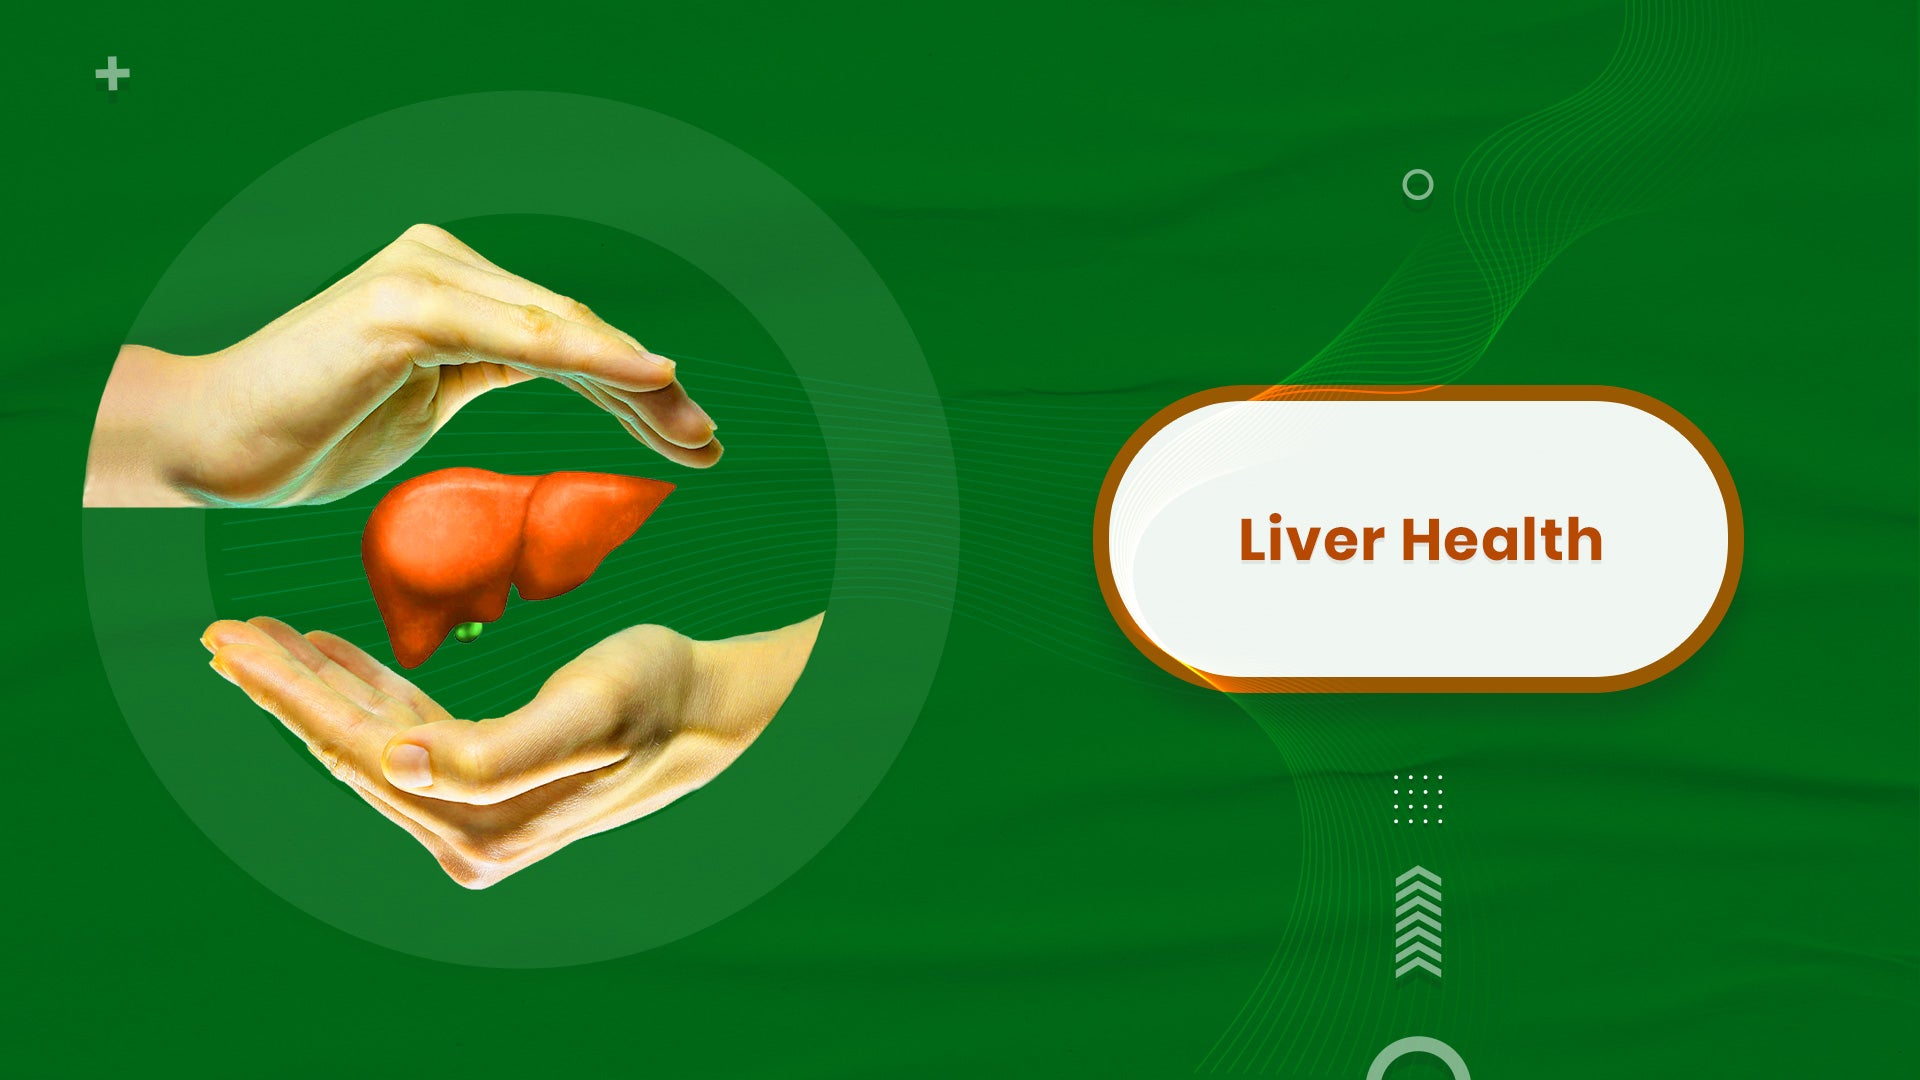 Load video: LivBalya for liver health